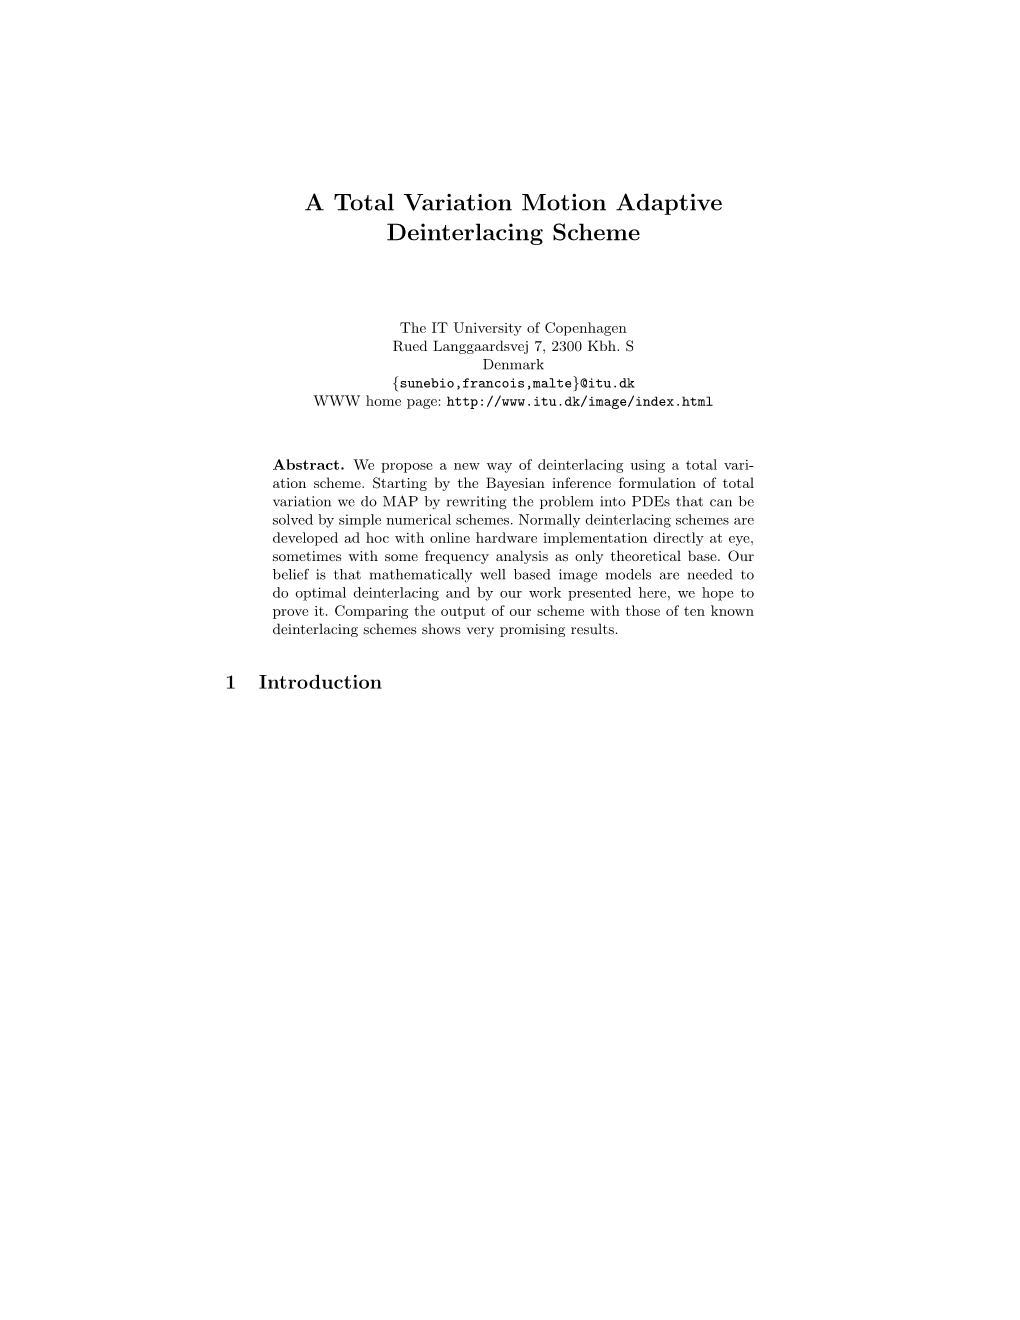 A Total Variation Motion Adaptive Deinterlacing Scheme